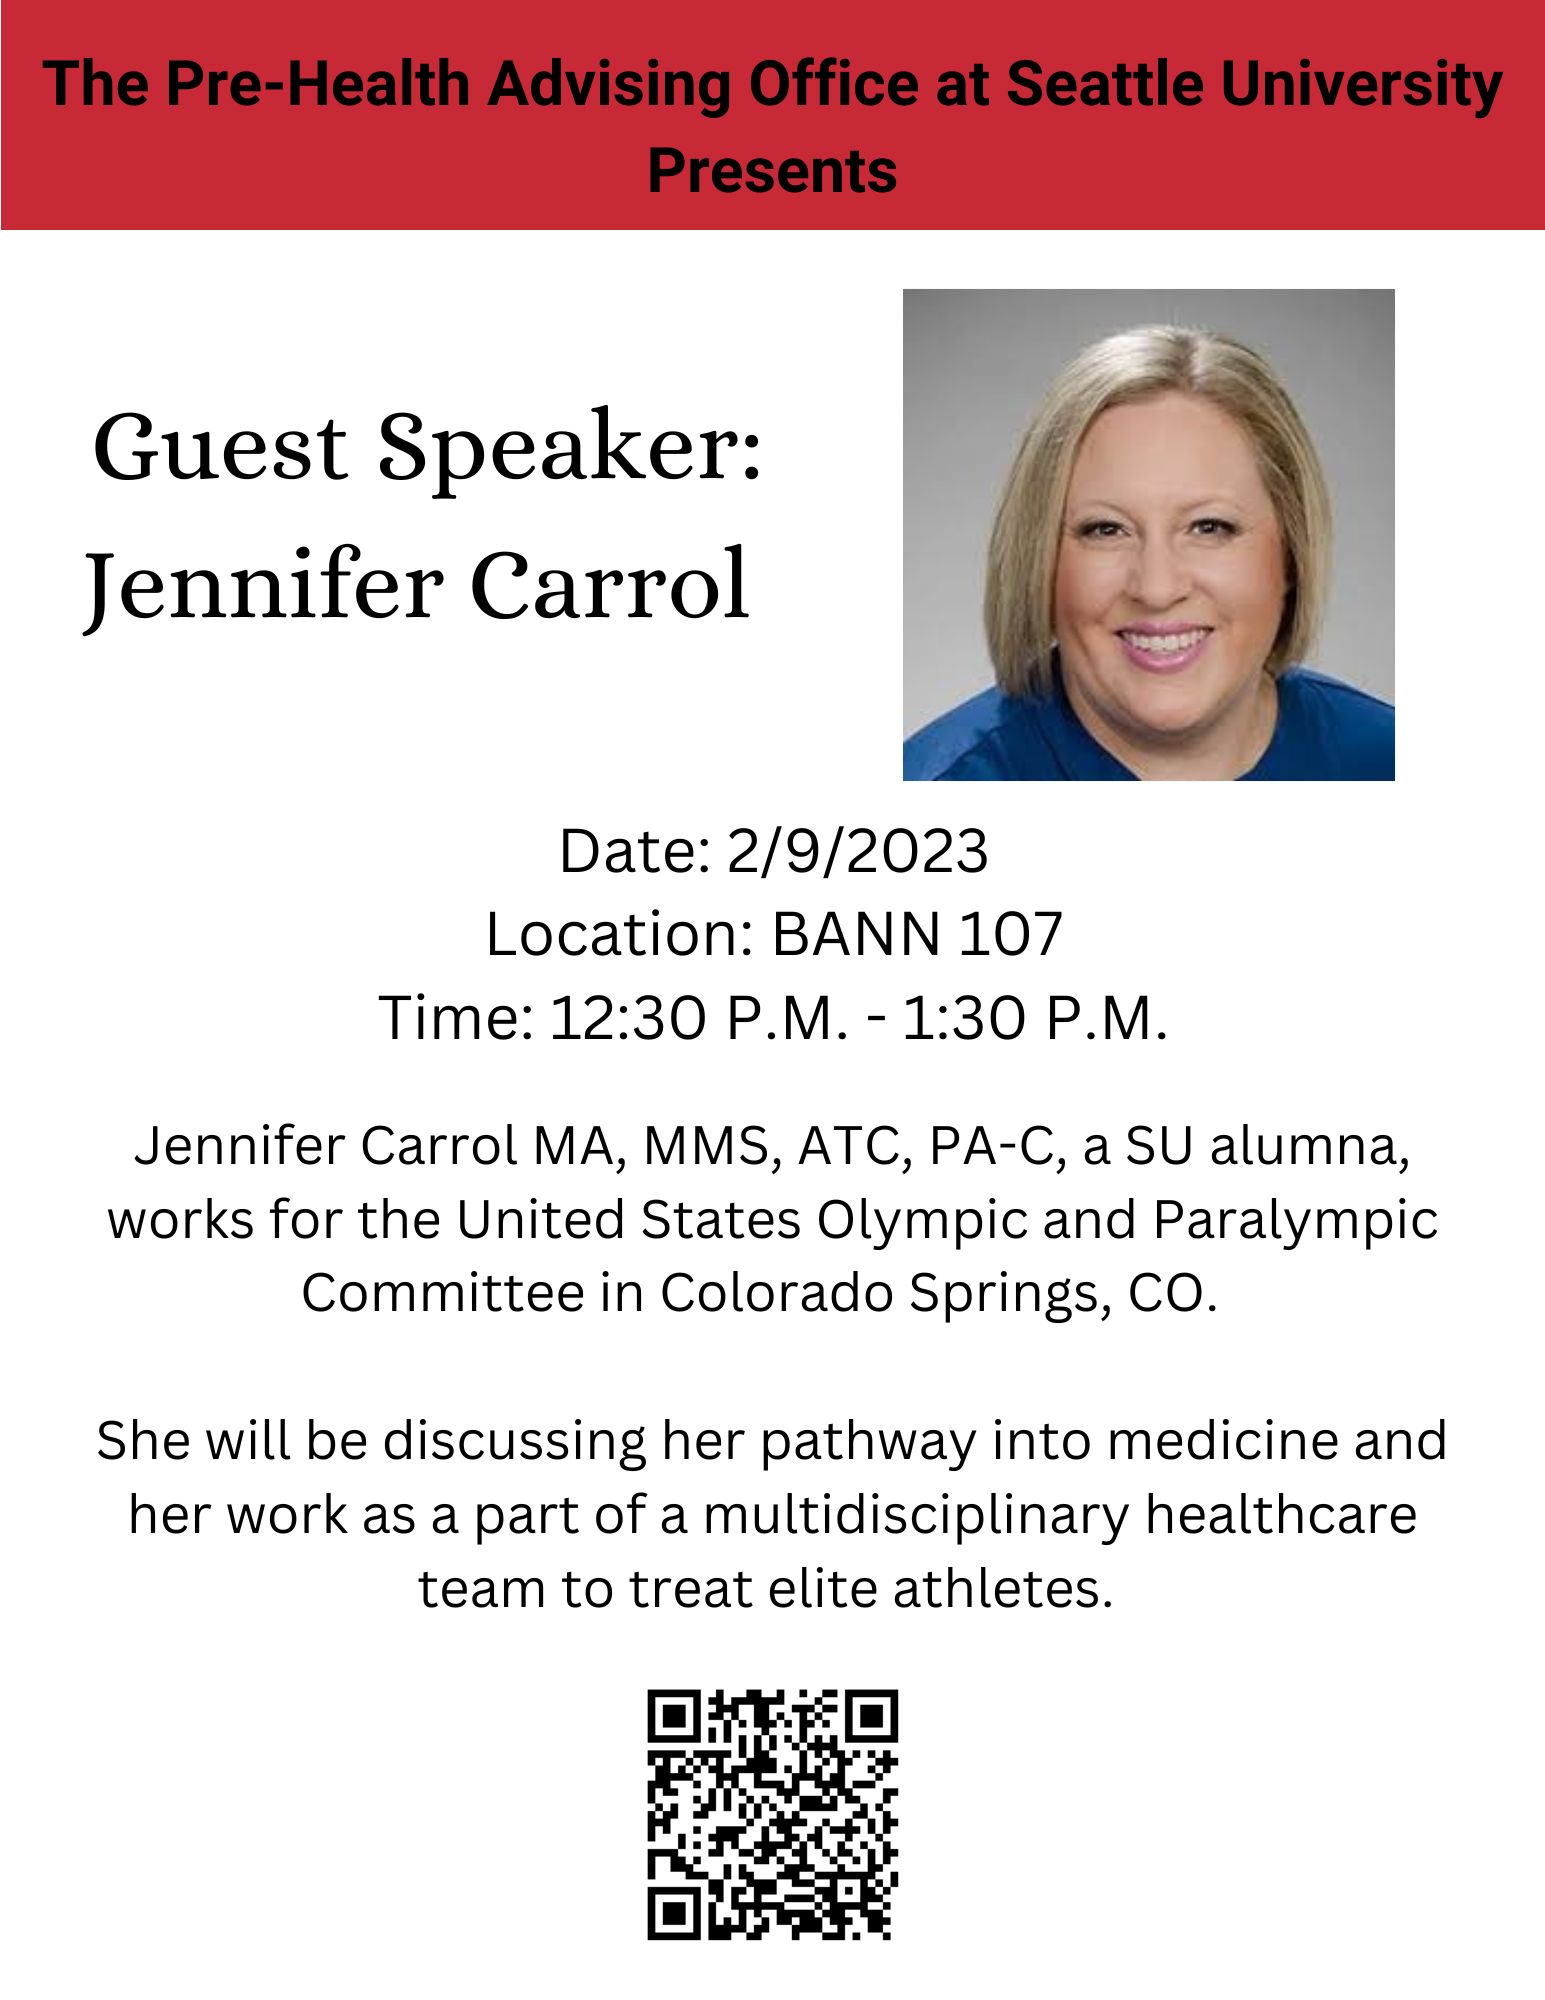 Jennifer Carroll to Speak at Pre-Health Event